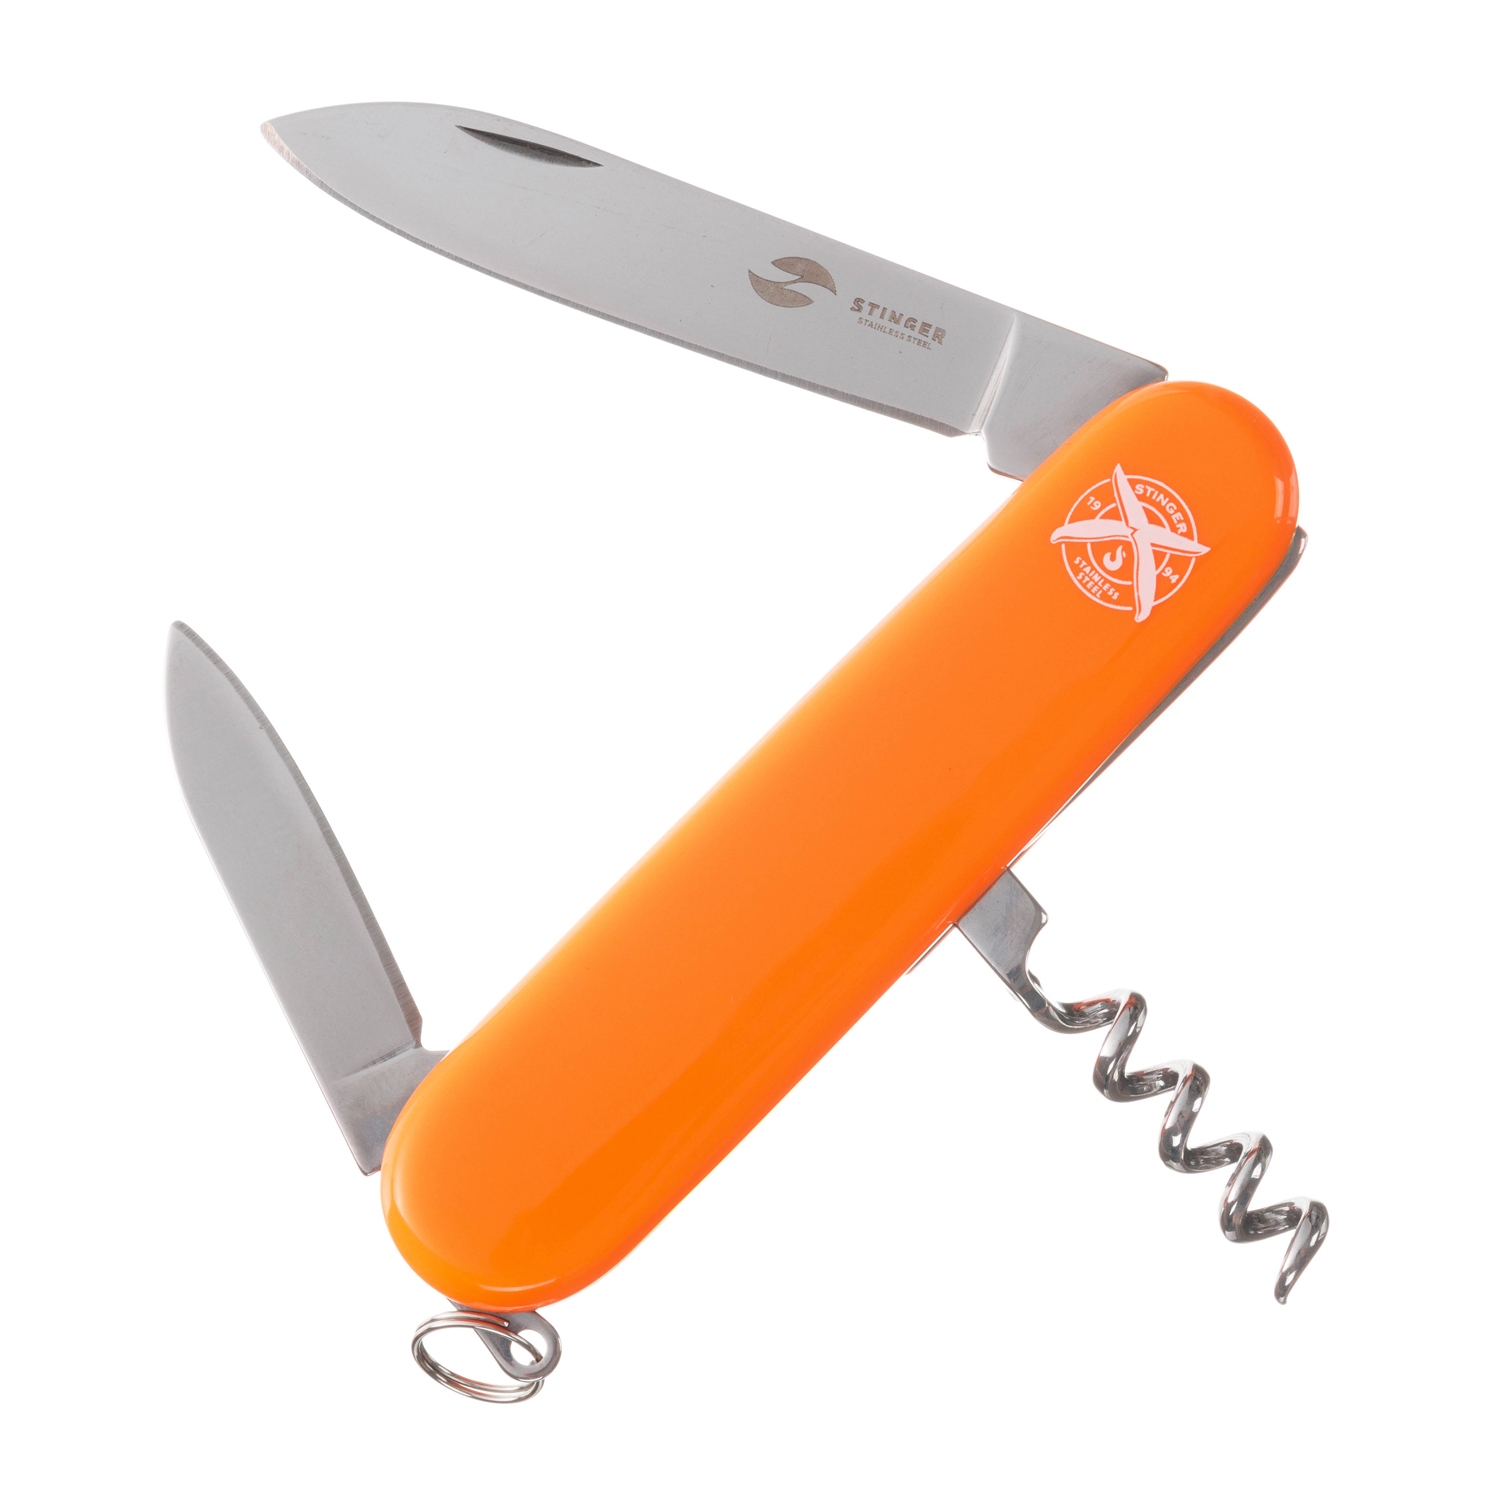 Нож перочинный Stinger, 90 мм, 4 функции, материал рукояти: АБС-пластик (оранжевый), оранжевый, пластик